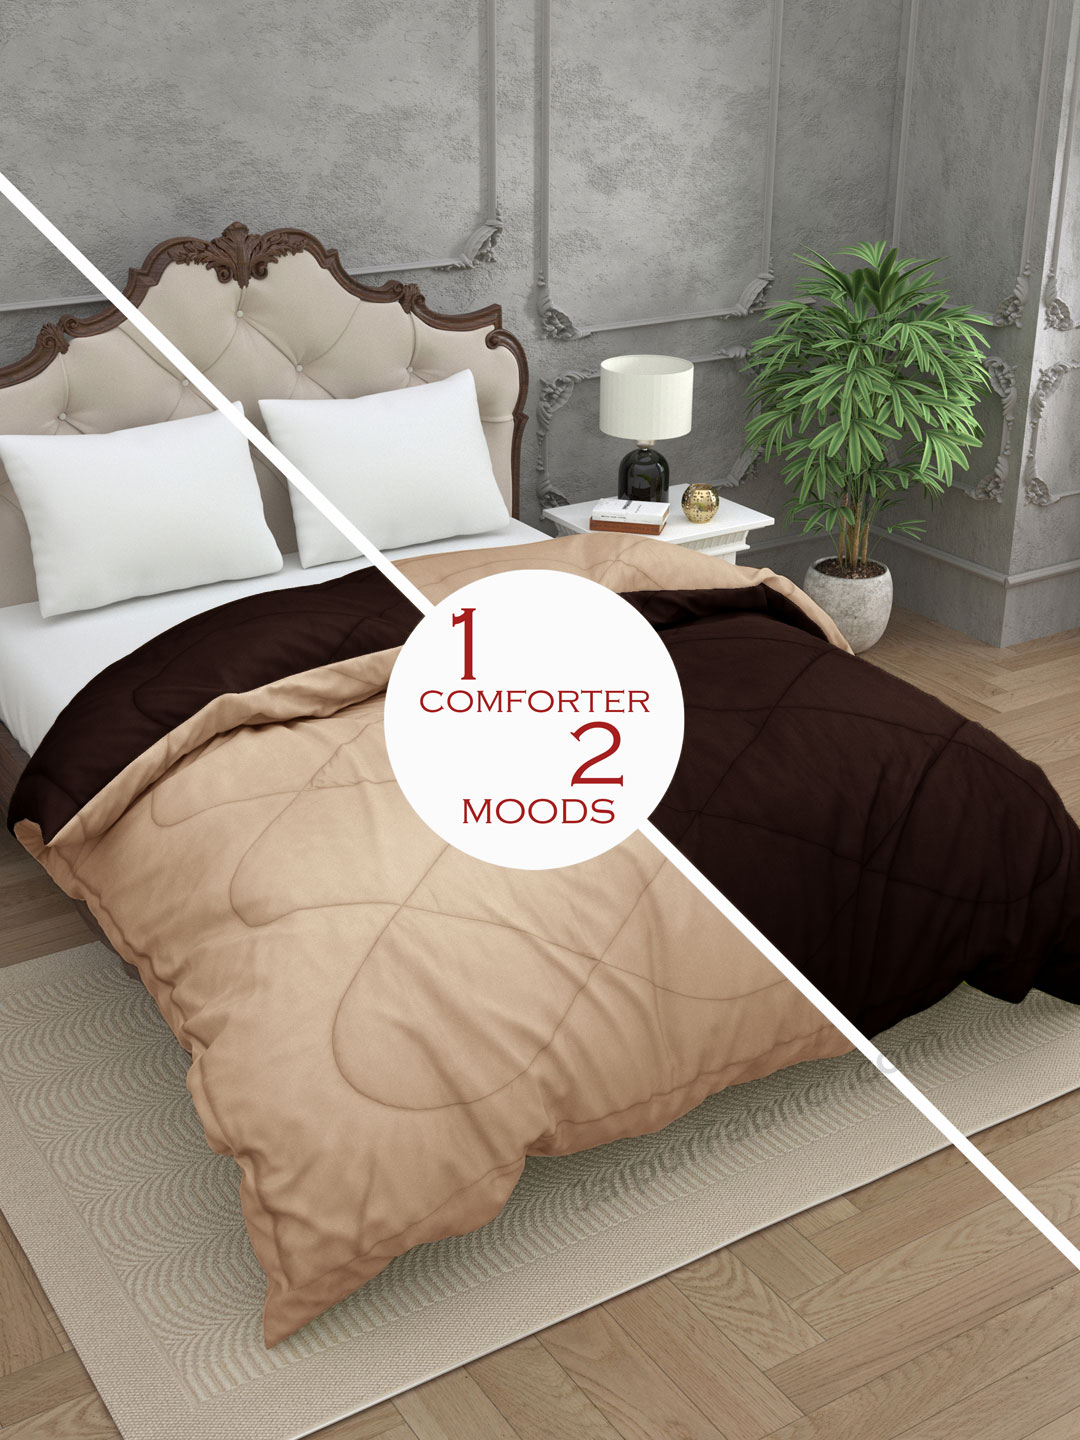 Off White-Dark Brown Double Bed Comforter